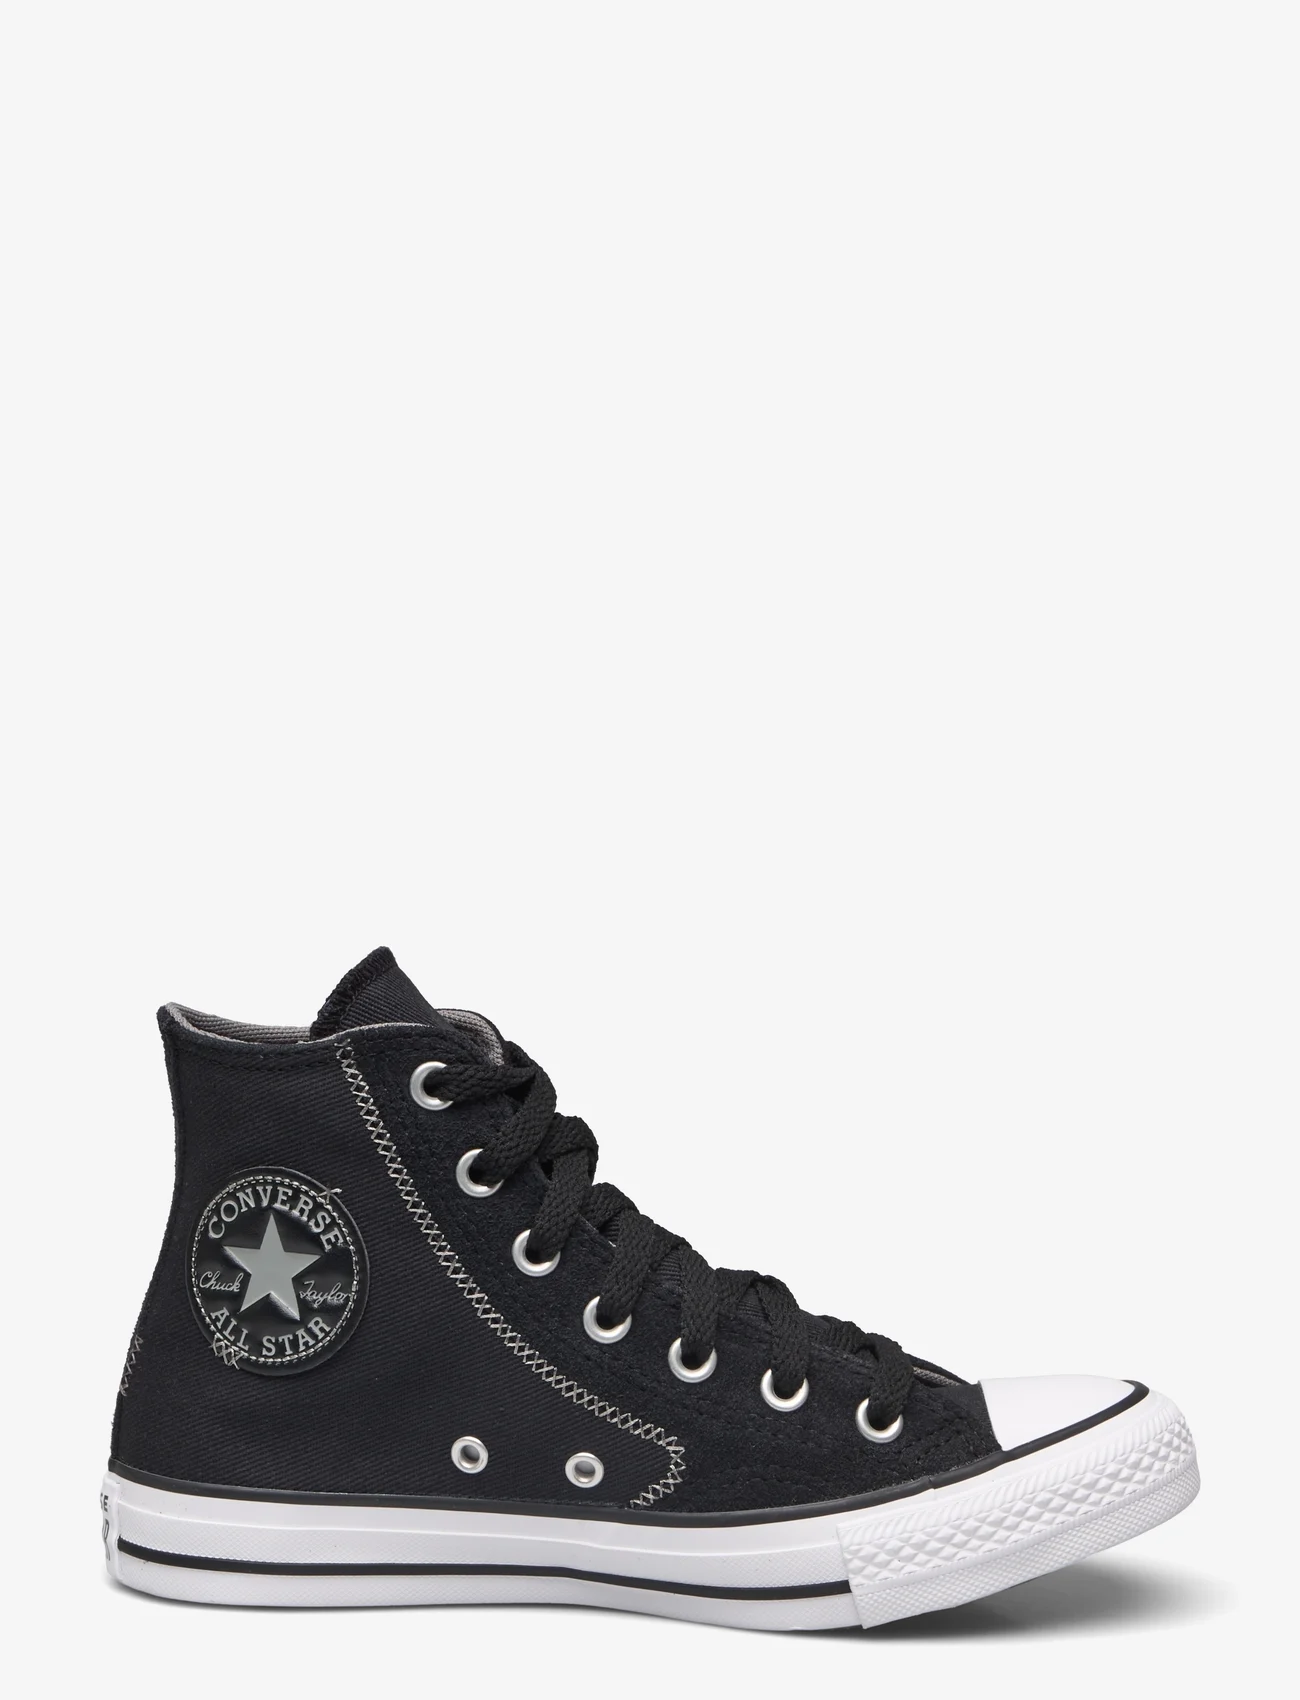 Converse - Chuck Taylor All Star - high top sneakers - black/origin story/black - 1